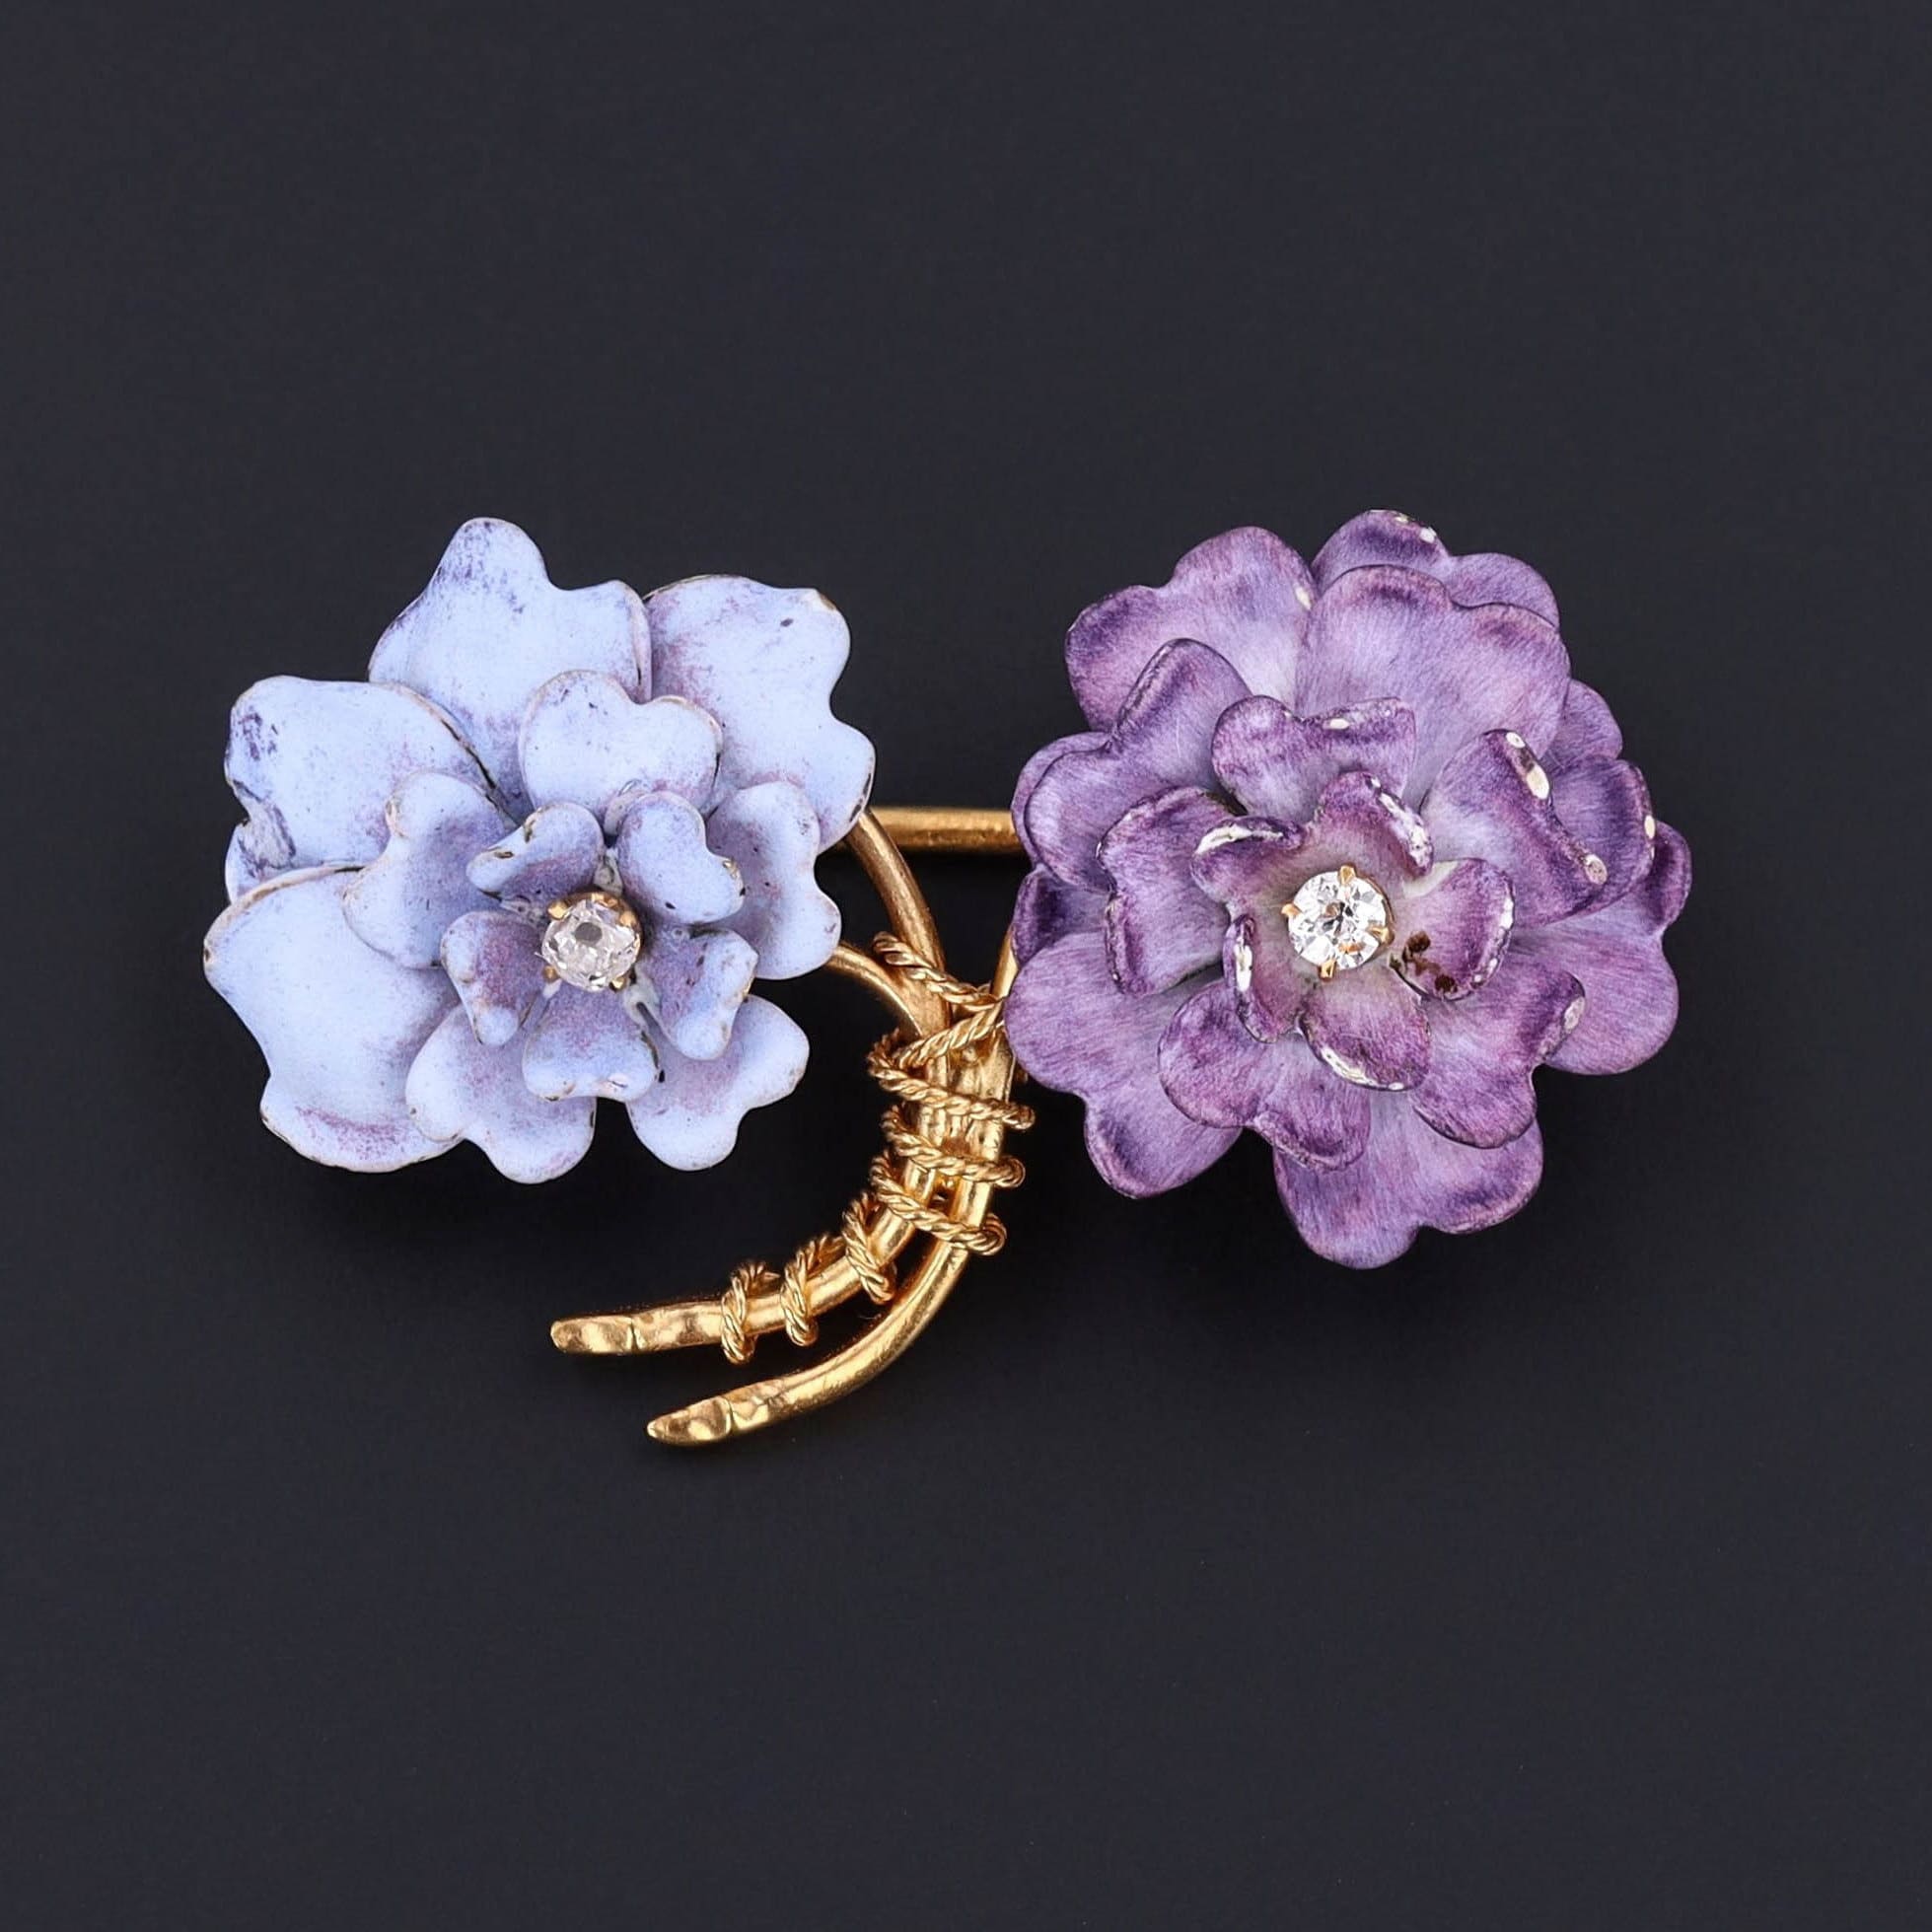 Antique Flower Brooch | Antique Pin 